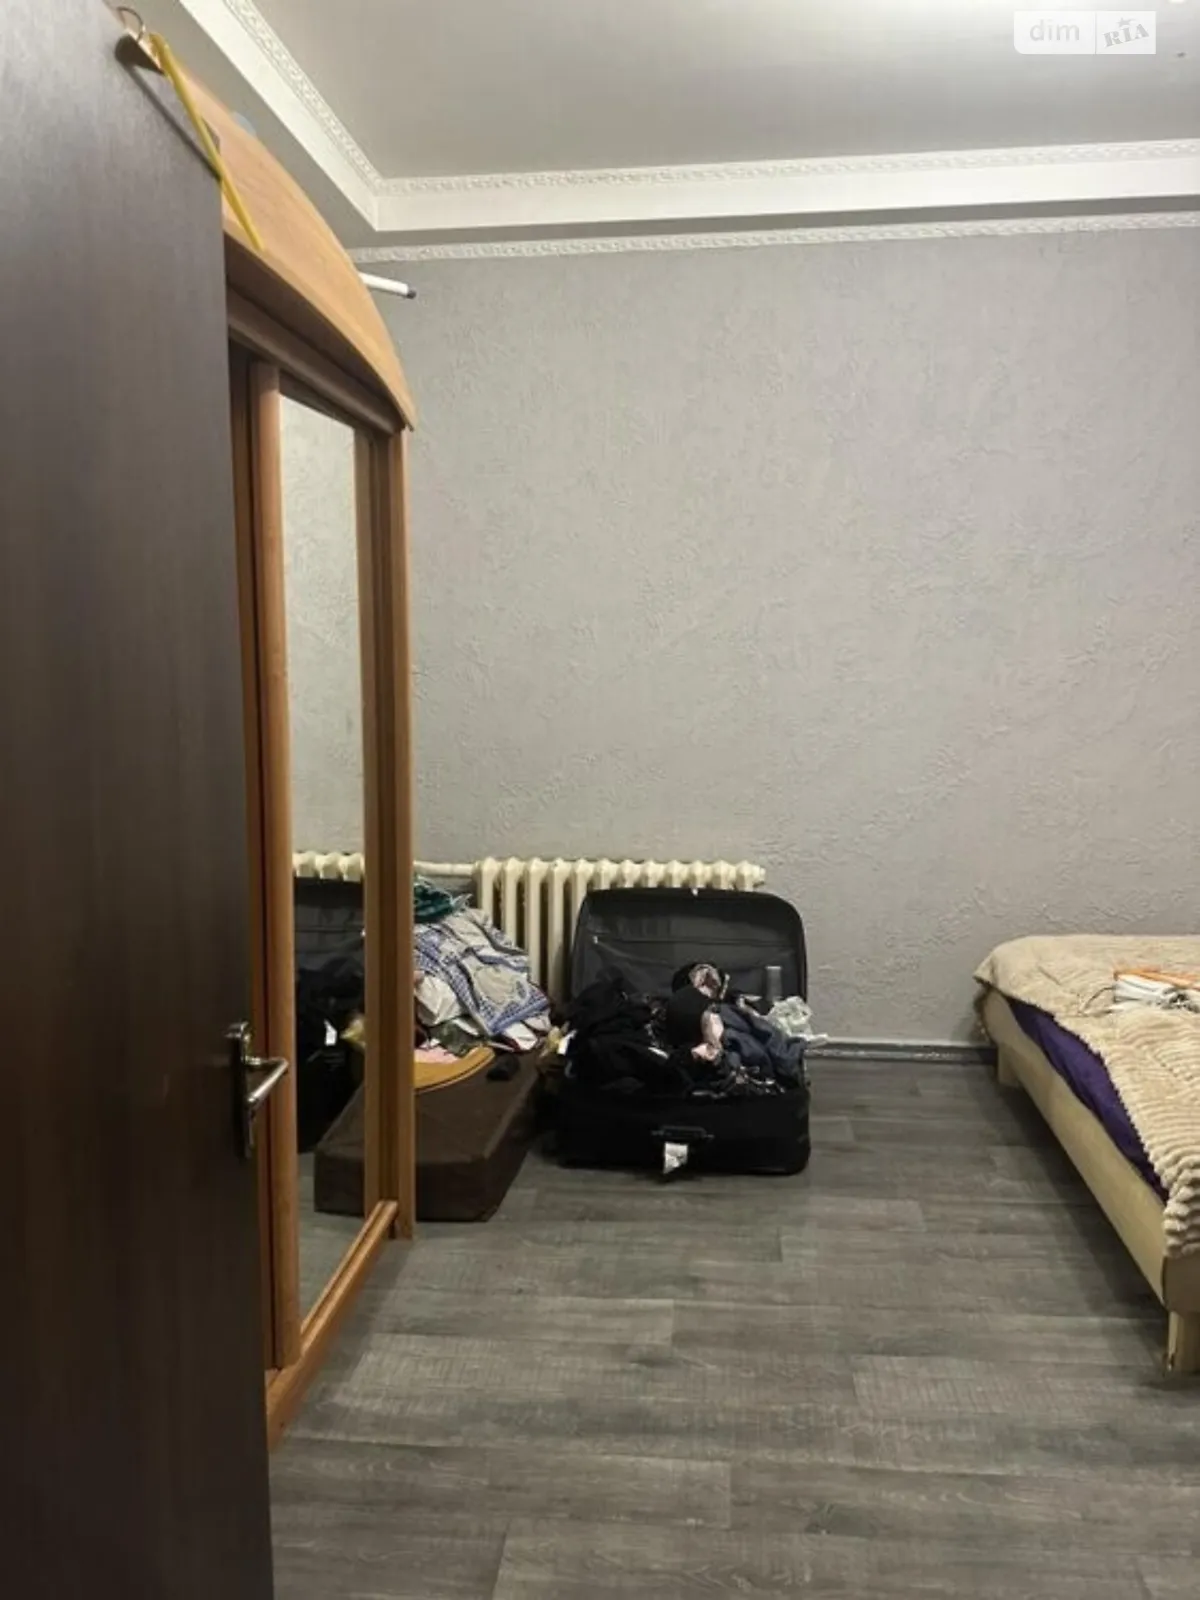 Продается комната 25 кв. м в Николаеве - фото 2